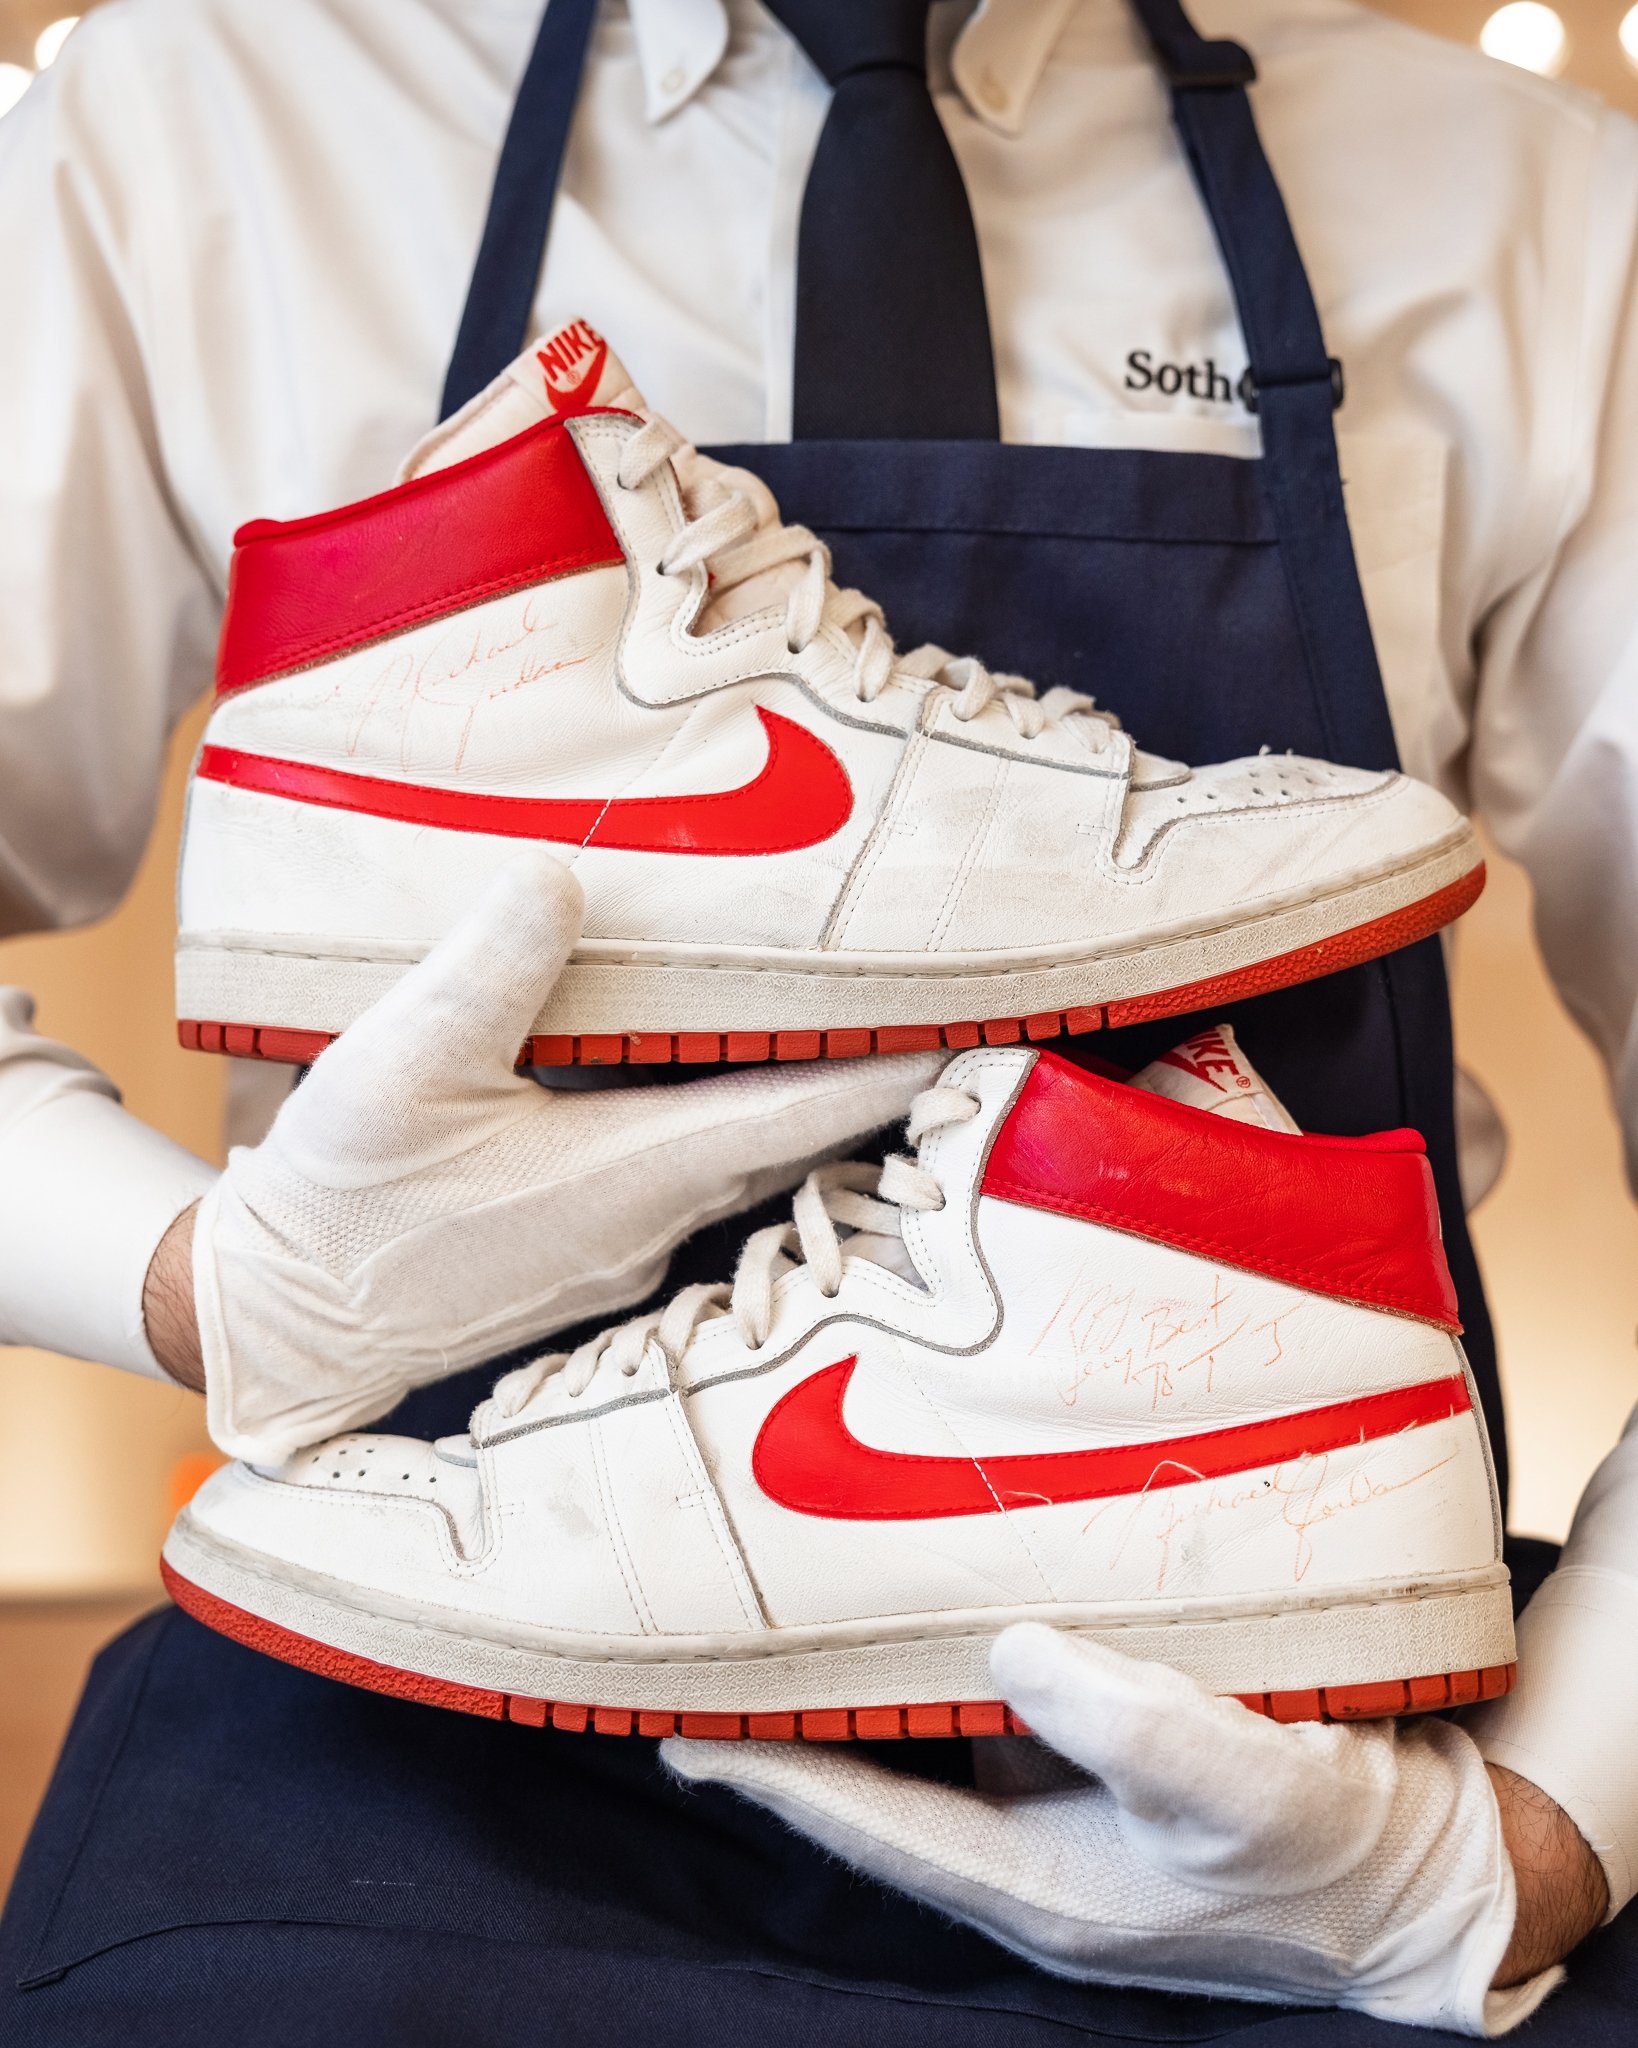 Michael Jordan: 'Air Jordan' shoes from rookie year sell for $560,000